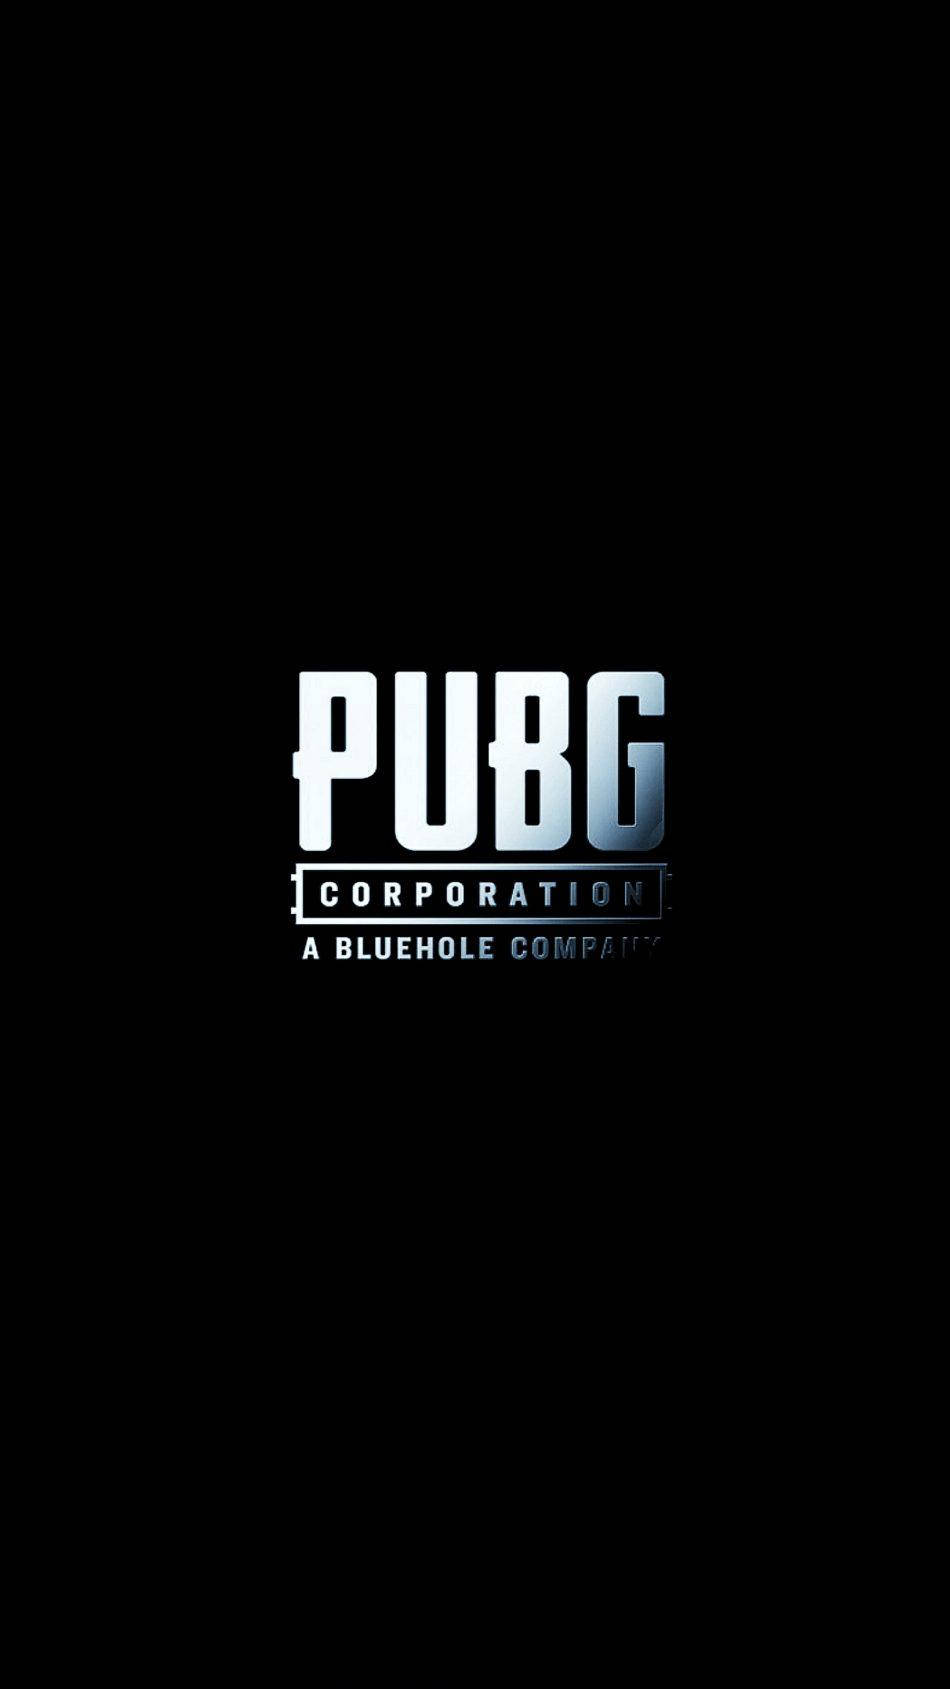 Corporation Pubg Logo Wallpaper